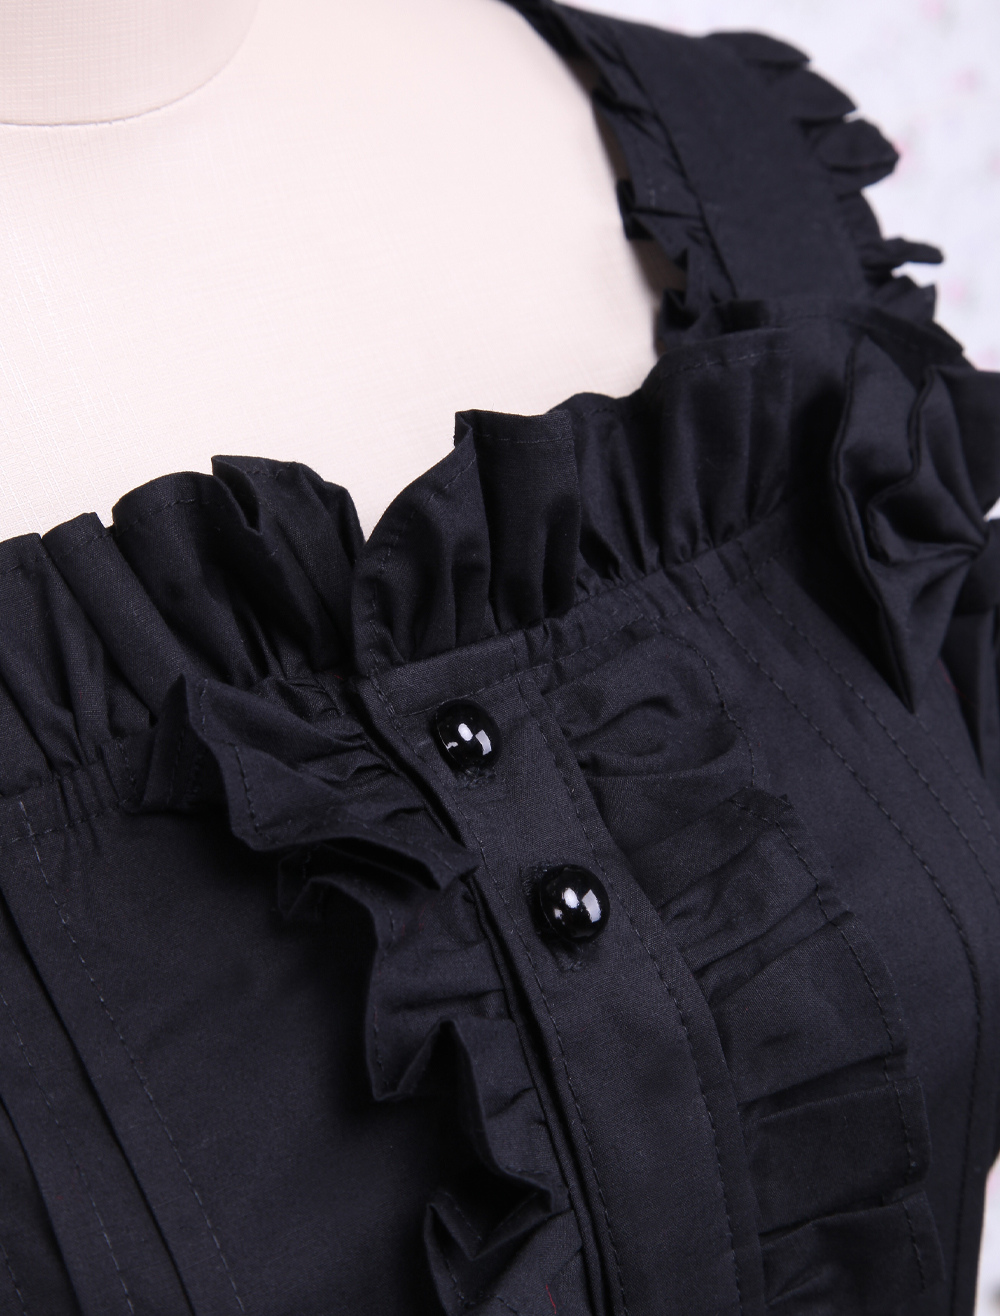 Sleeveless Cotton Black Lolita Dress - Milanoo.com